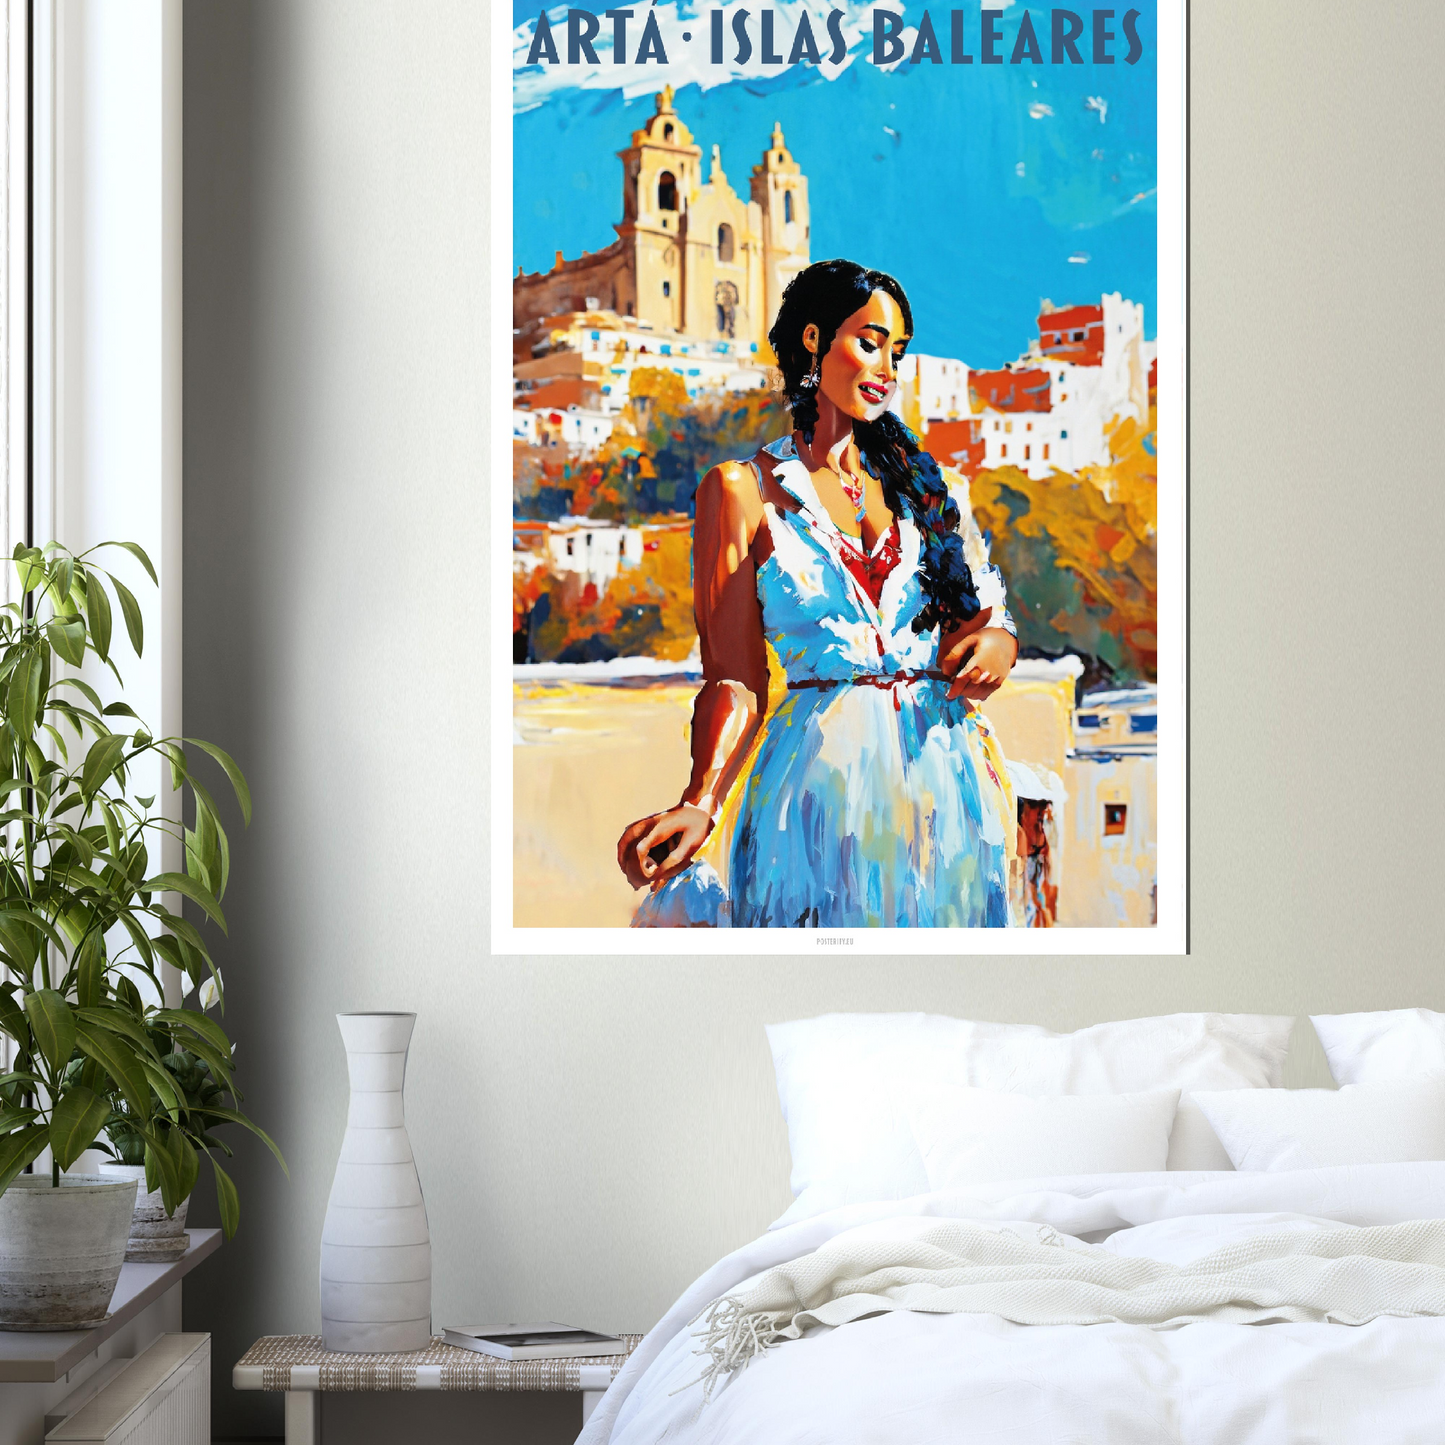 Artá, Mallorca, Poster by Posterify Design on Premium Matte Paper - Posterify